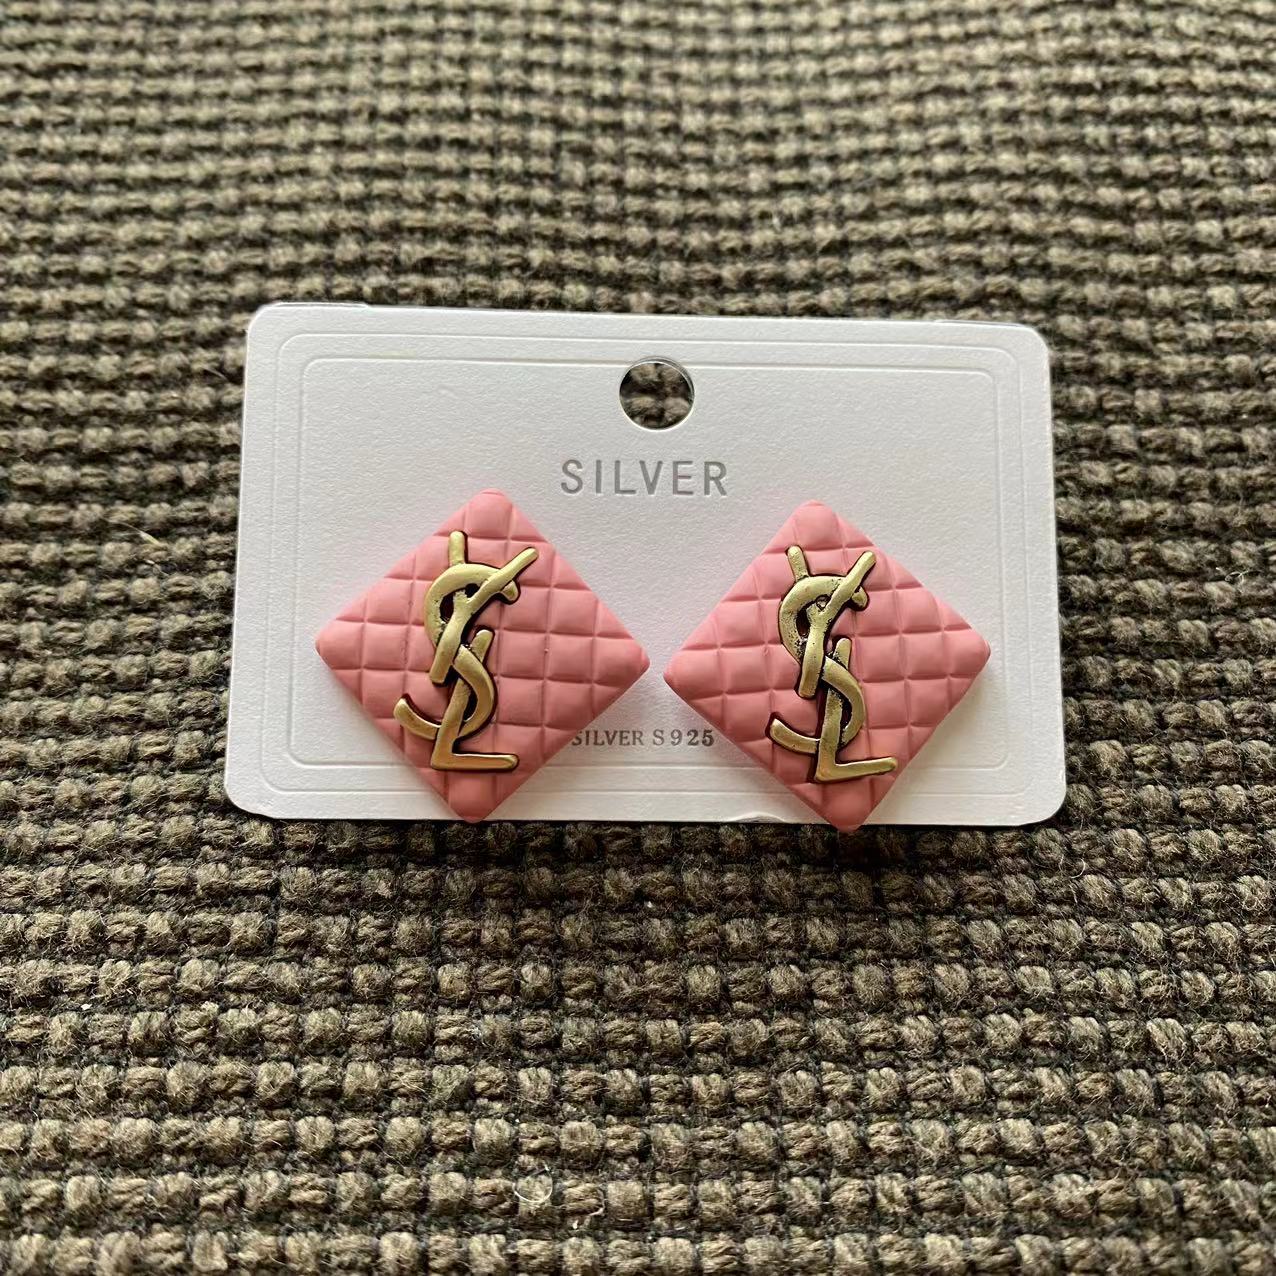 Big sale! Ysl Pink square earrings New